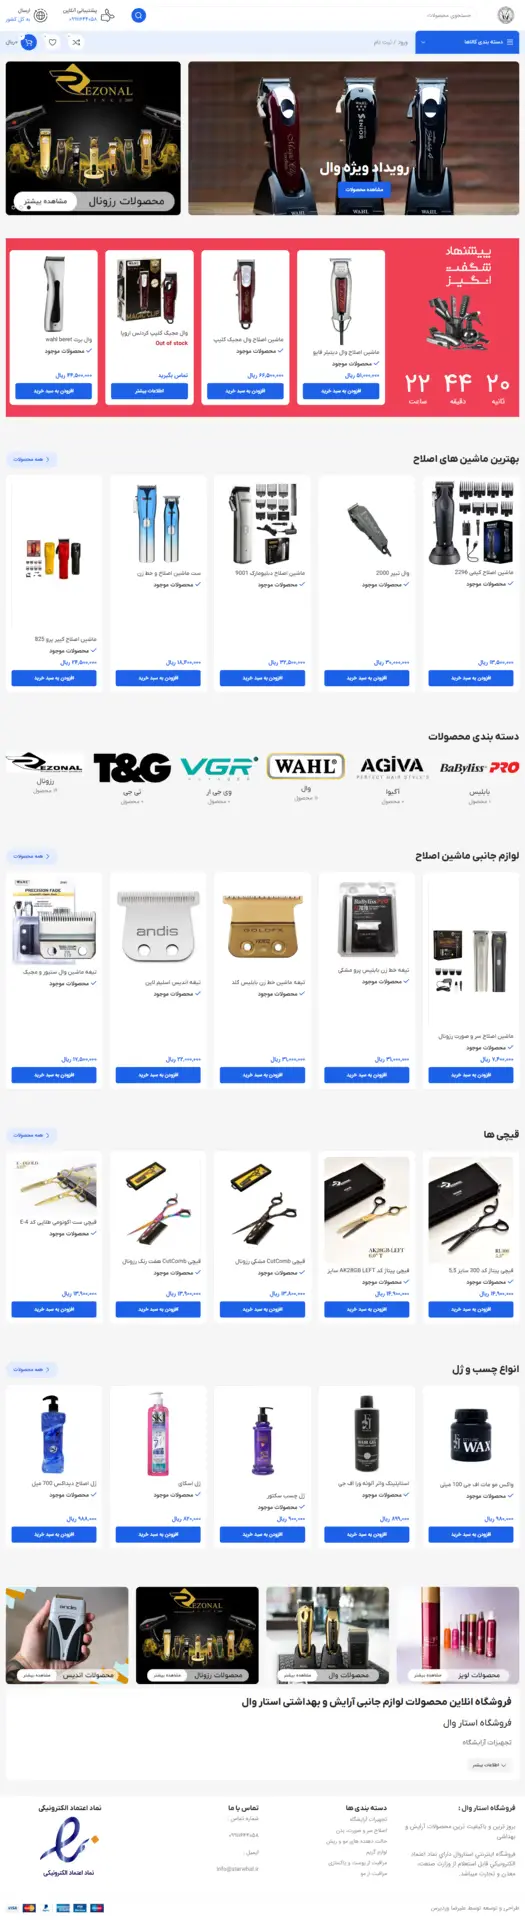 ezgif.com avif to webp converter